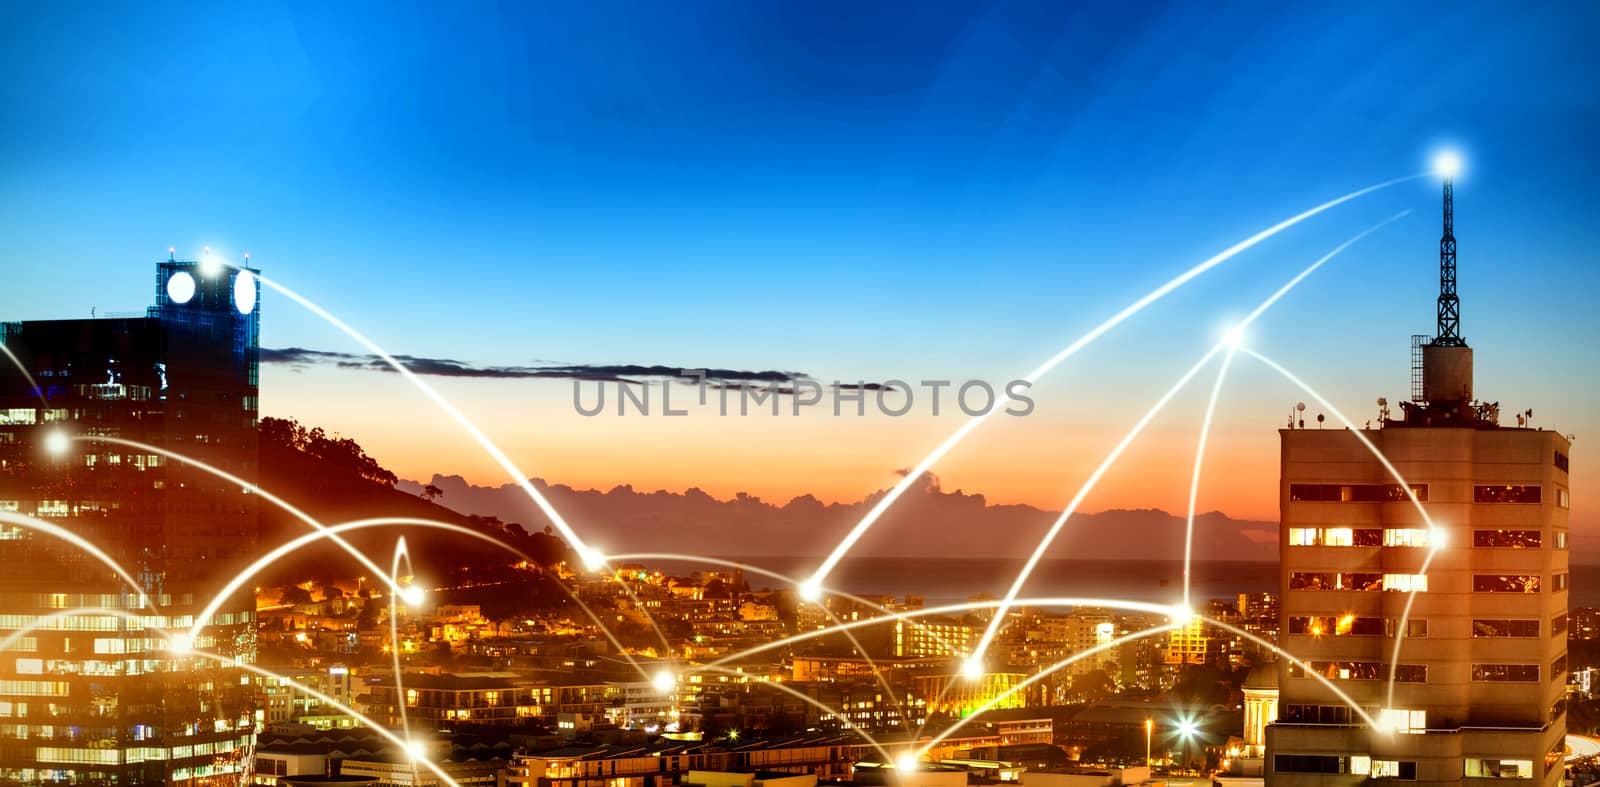 Illuminated buildings in city against sky by Wavebreakmedia